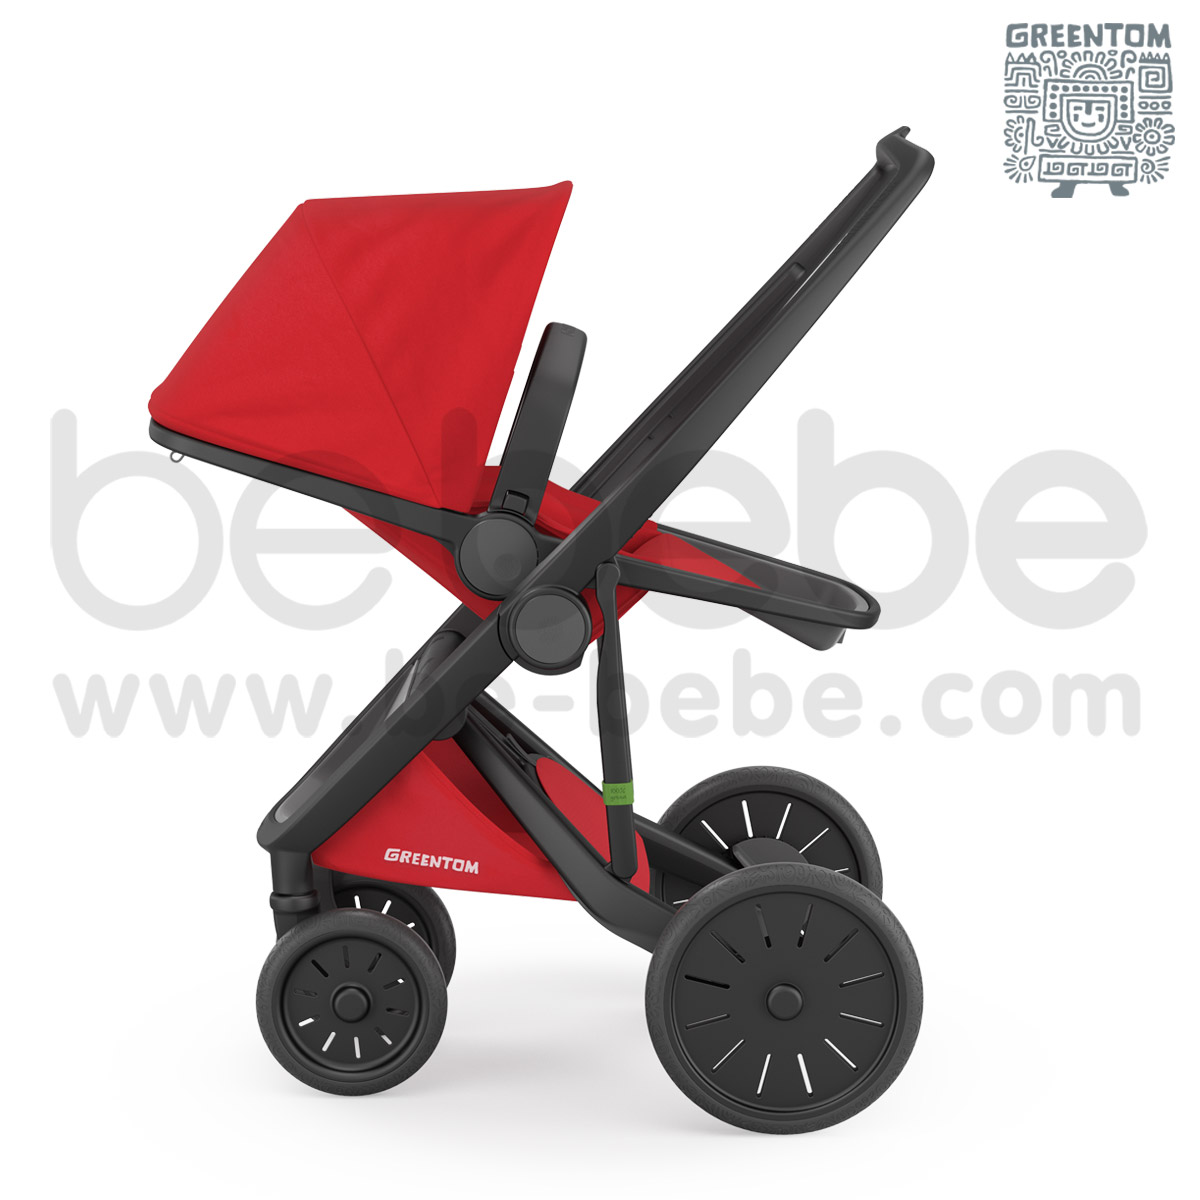 Greentom : Revesible Balck Frame Stroller - Red